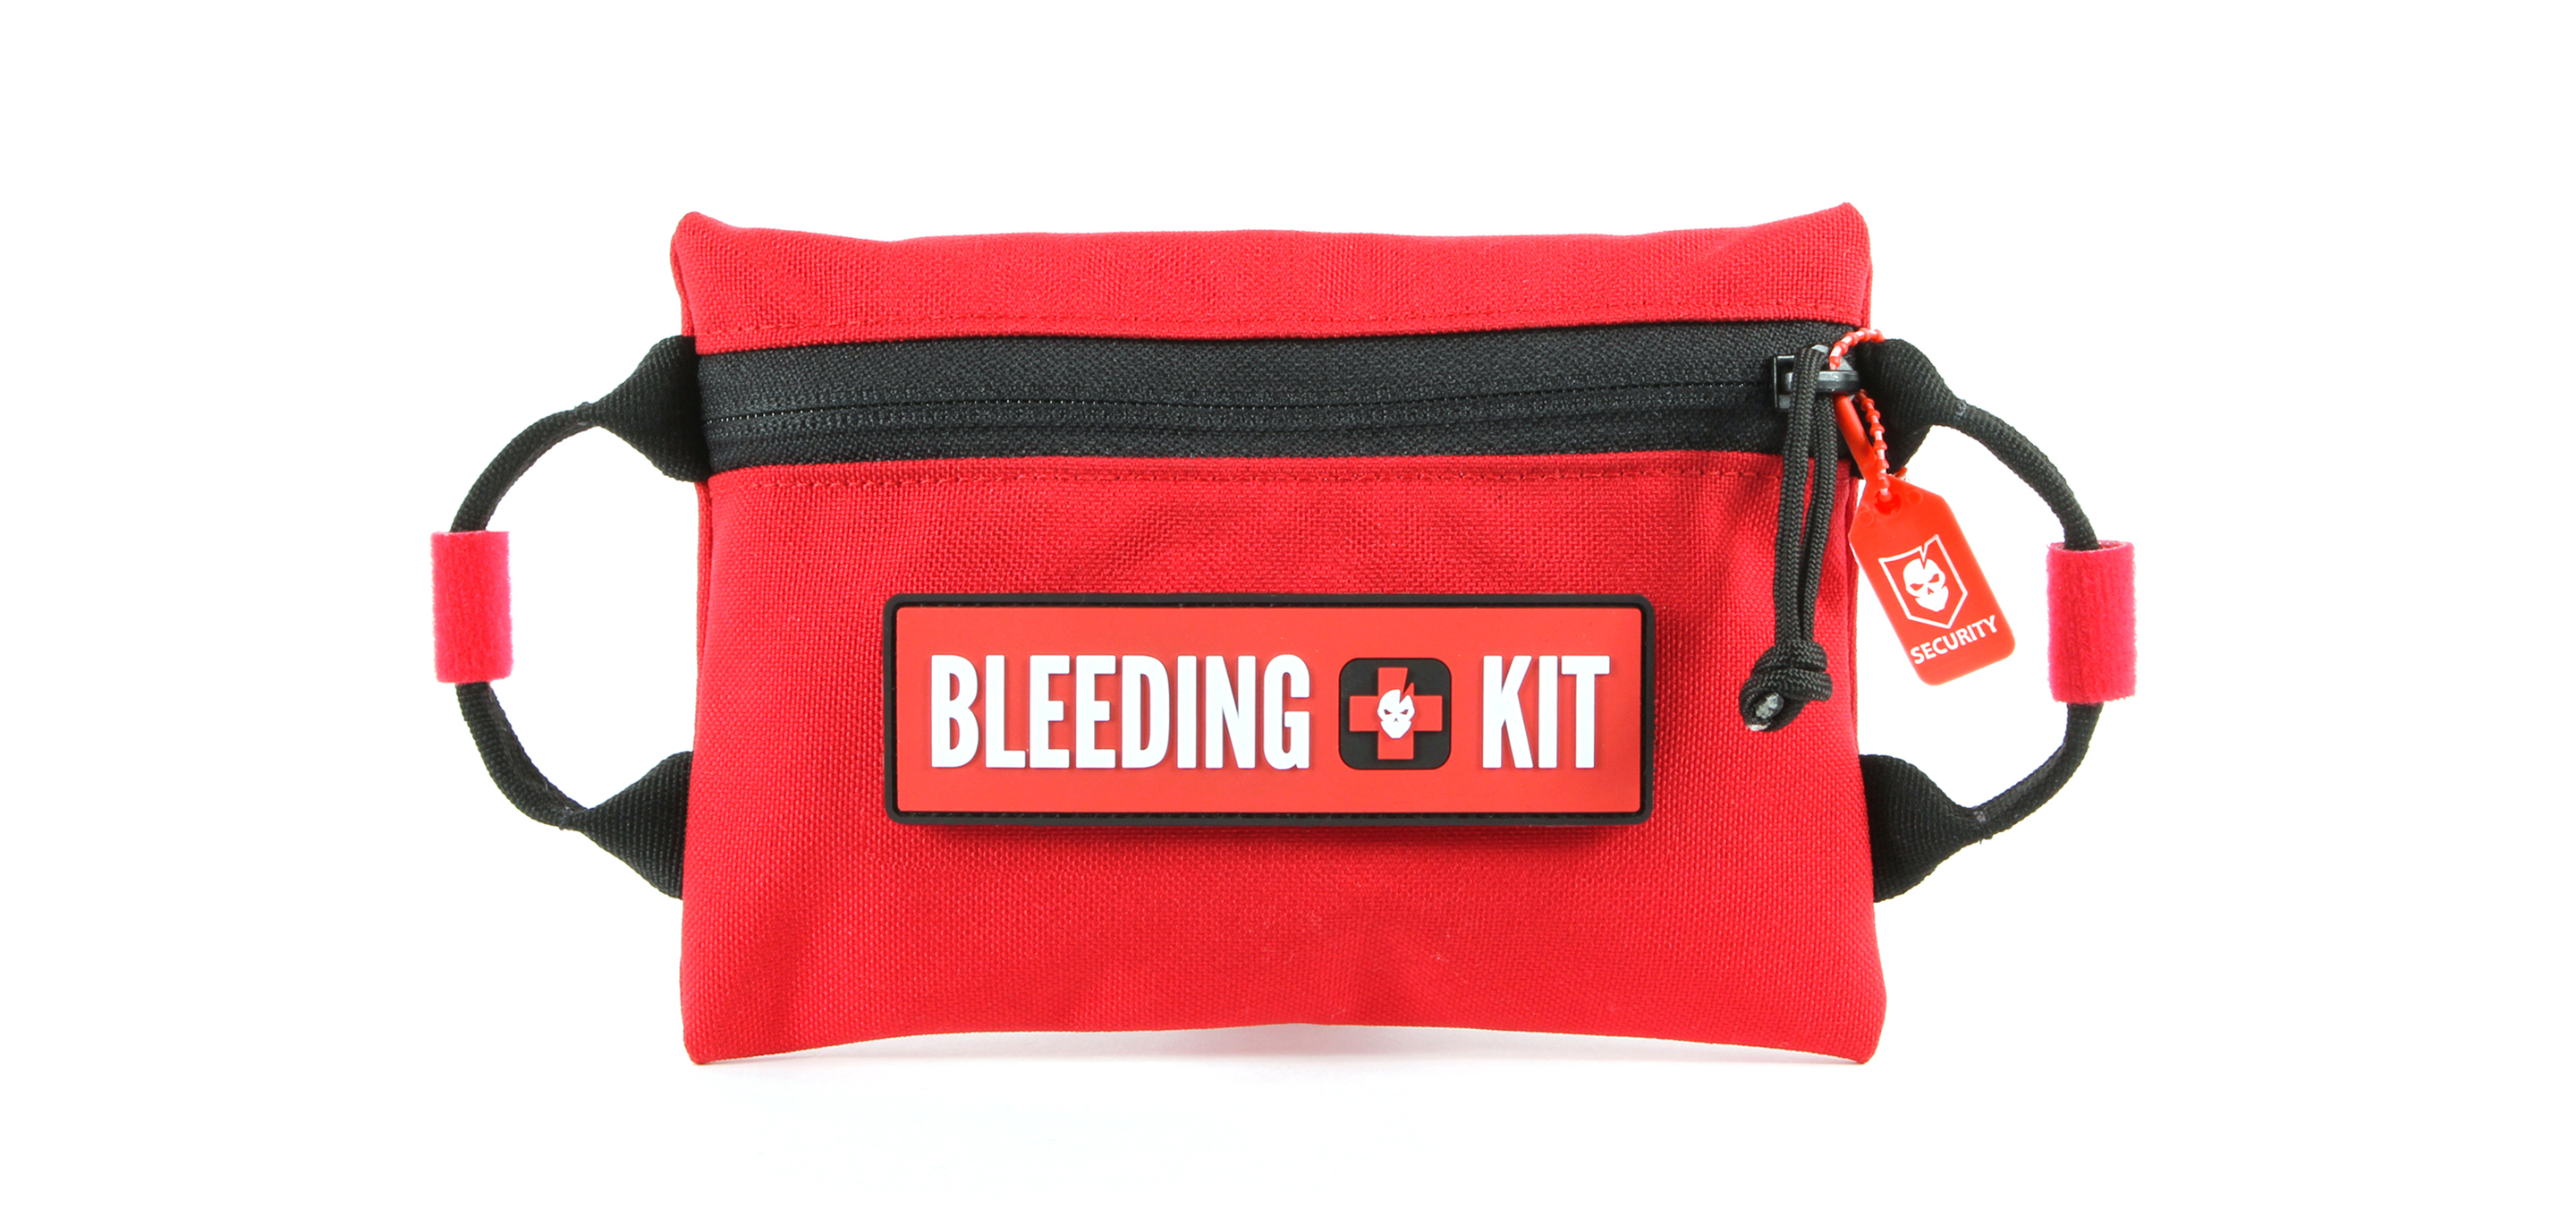 Bleeding Management Kit Featured